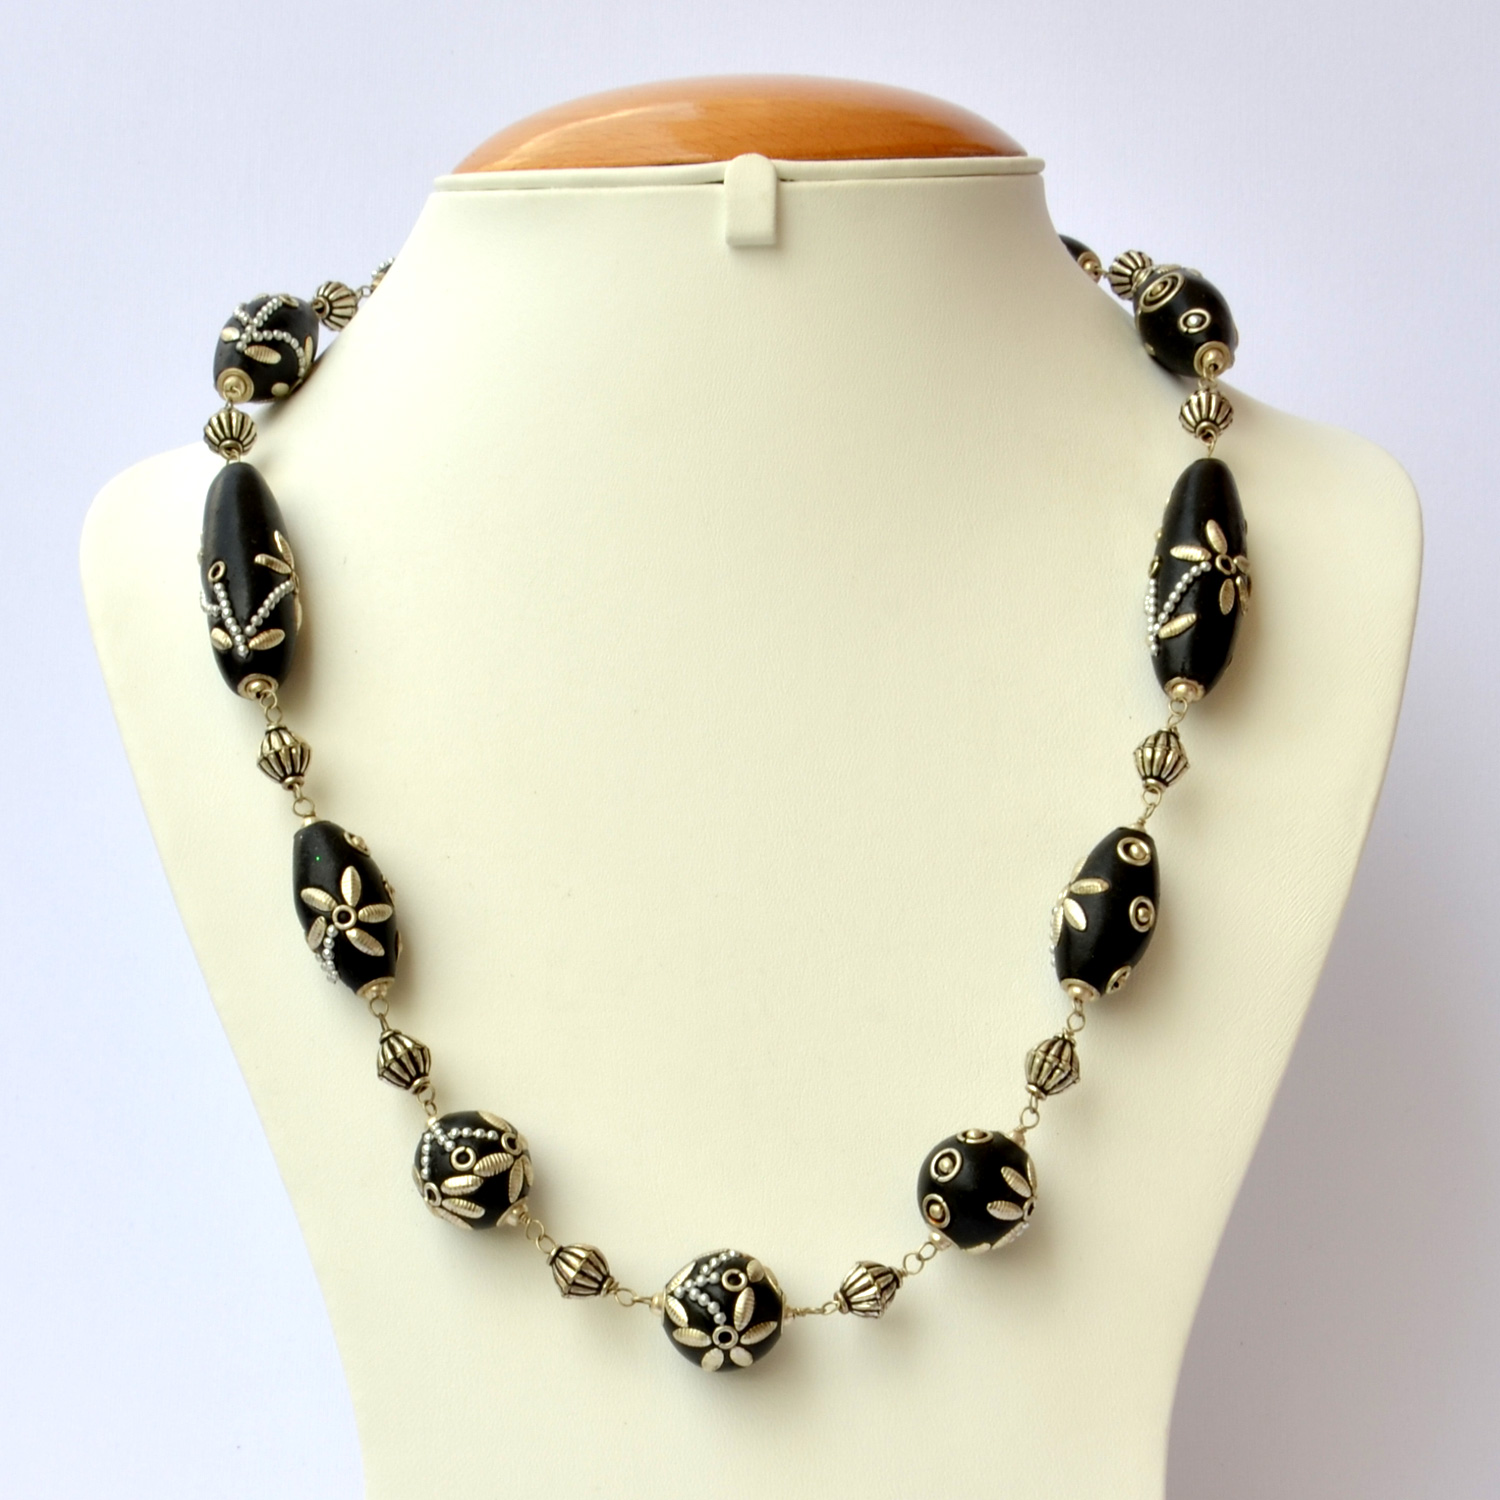 Handmade Necklace with Black Beads having Metal Accessories | Maruti Beads